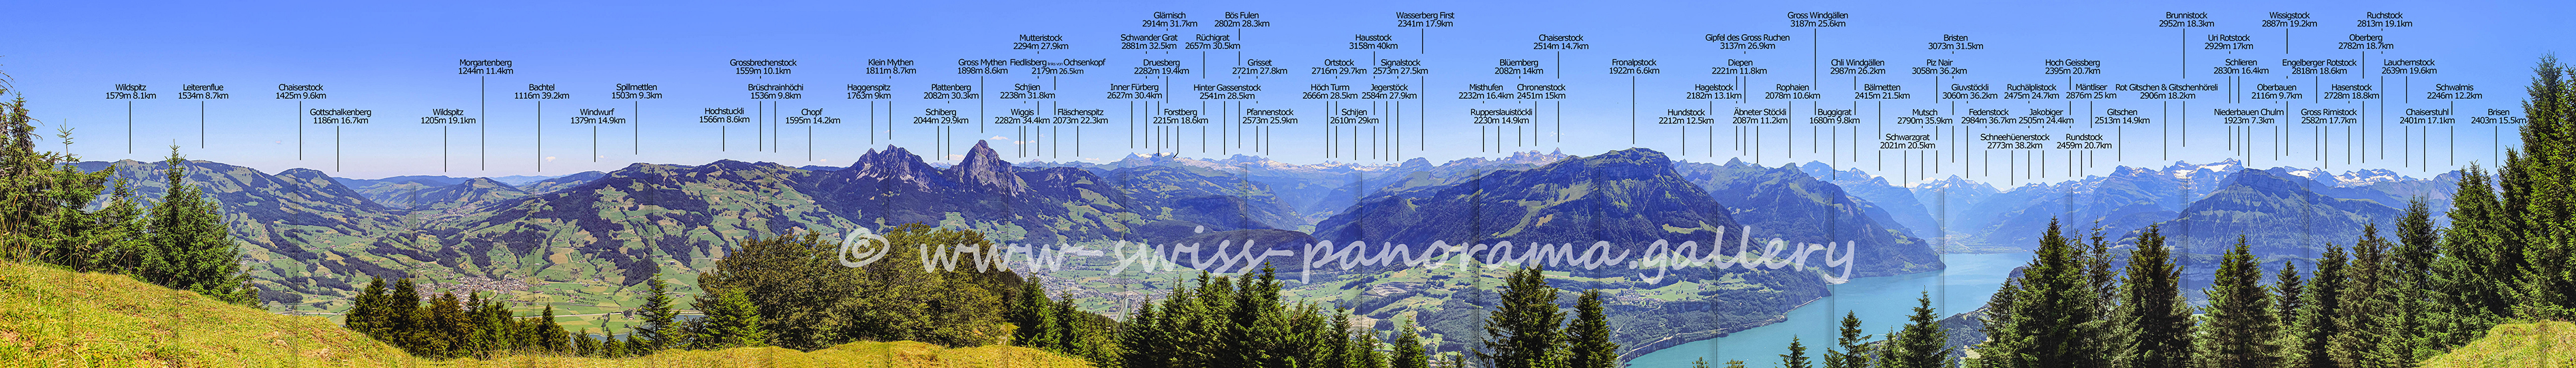 Alpen Panorama swiss-panorama gallery Urmiberg Blick über den Vierwaldstättersee